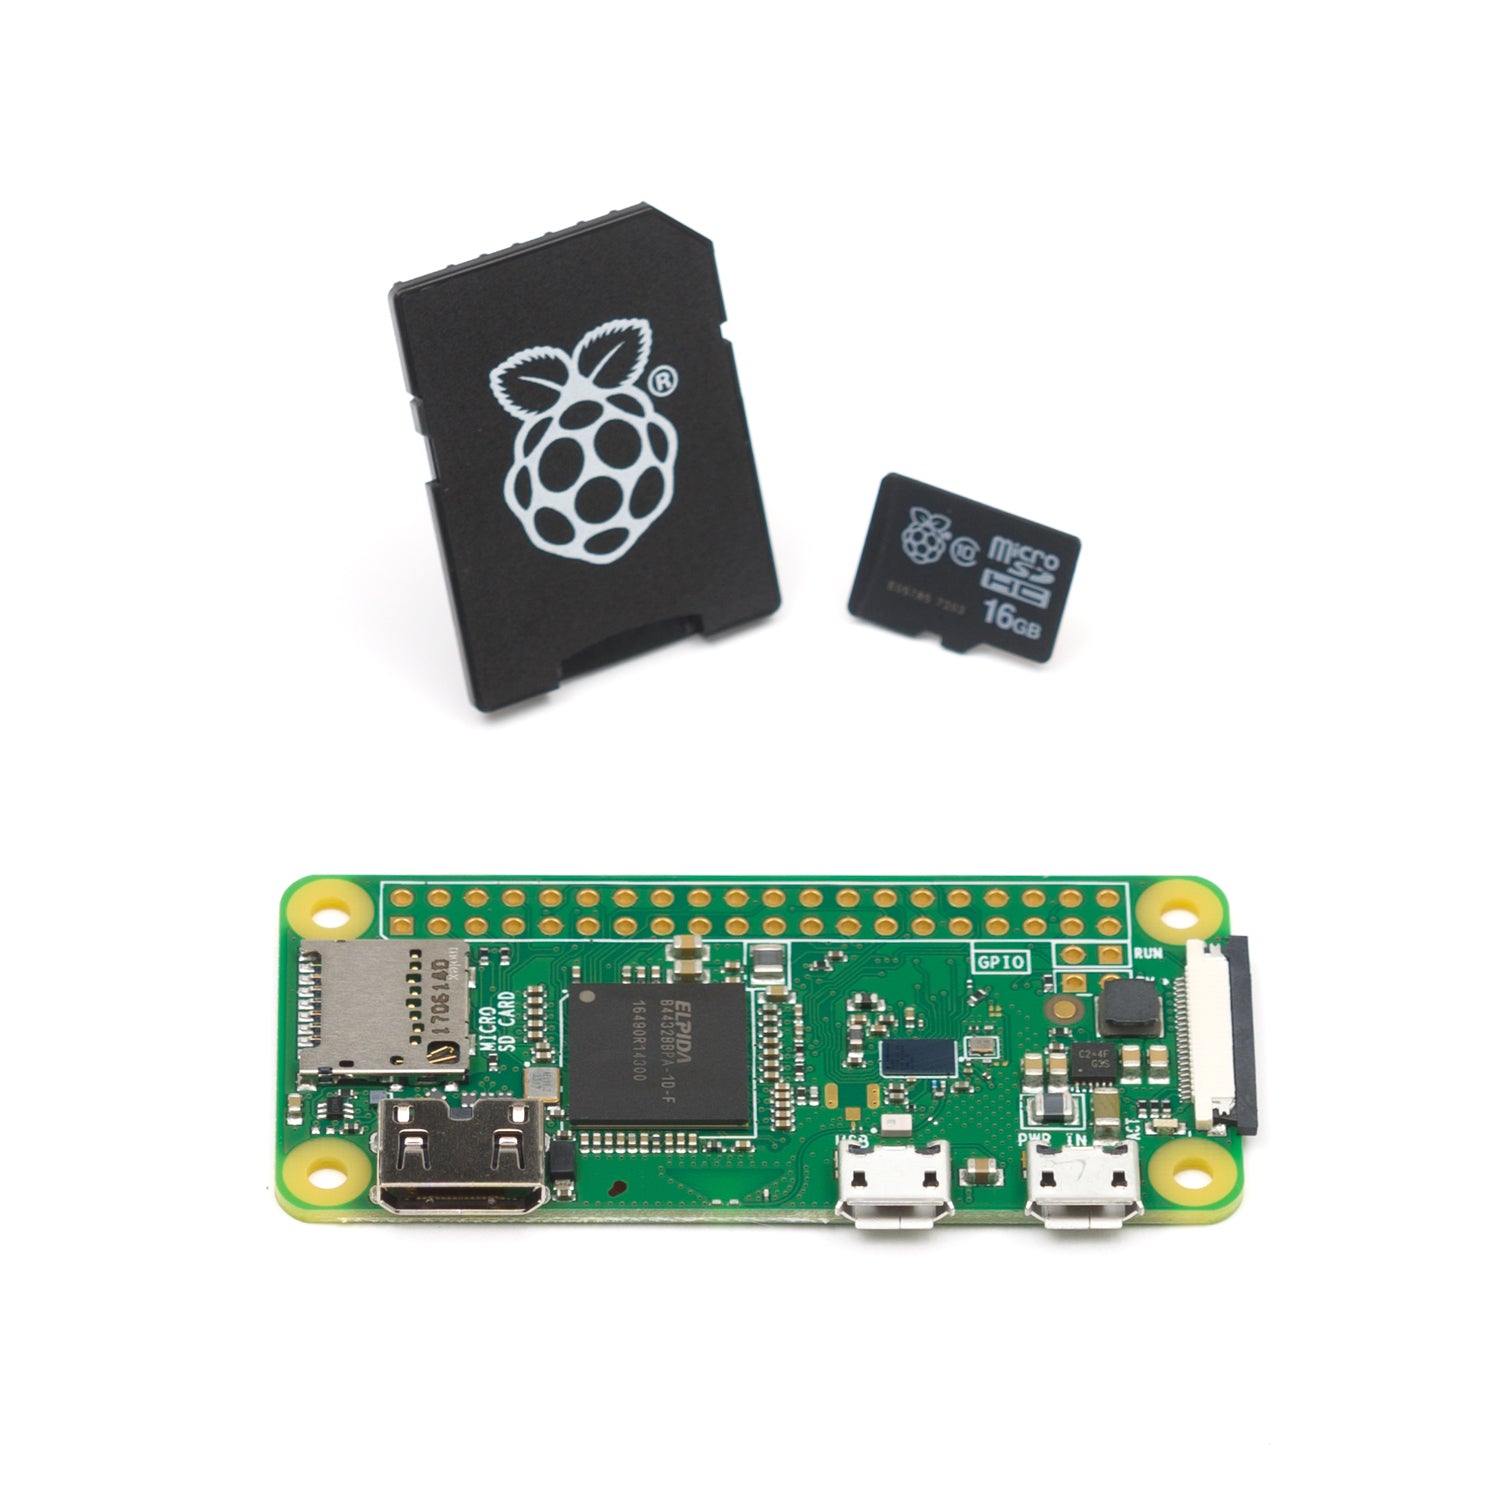 Raspberry Pi Zero W Basics Kit